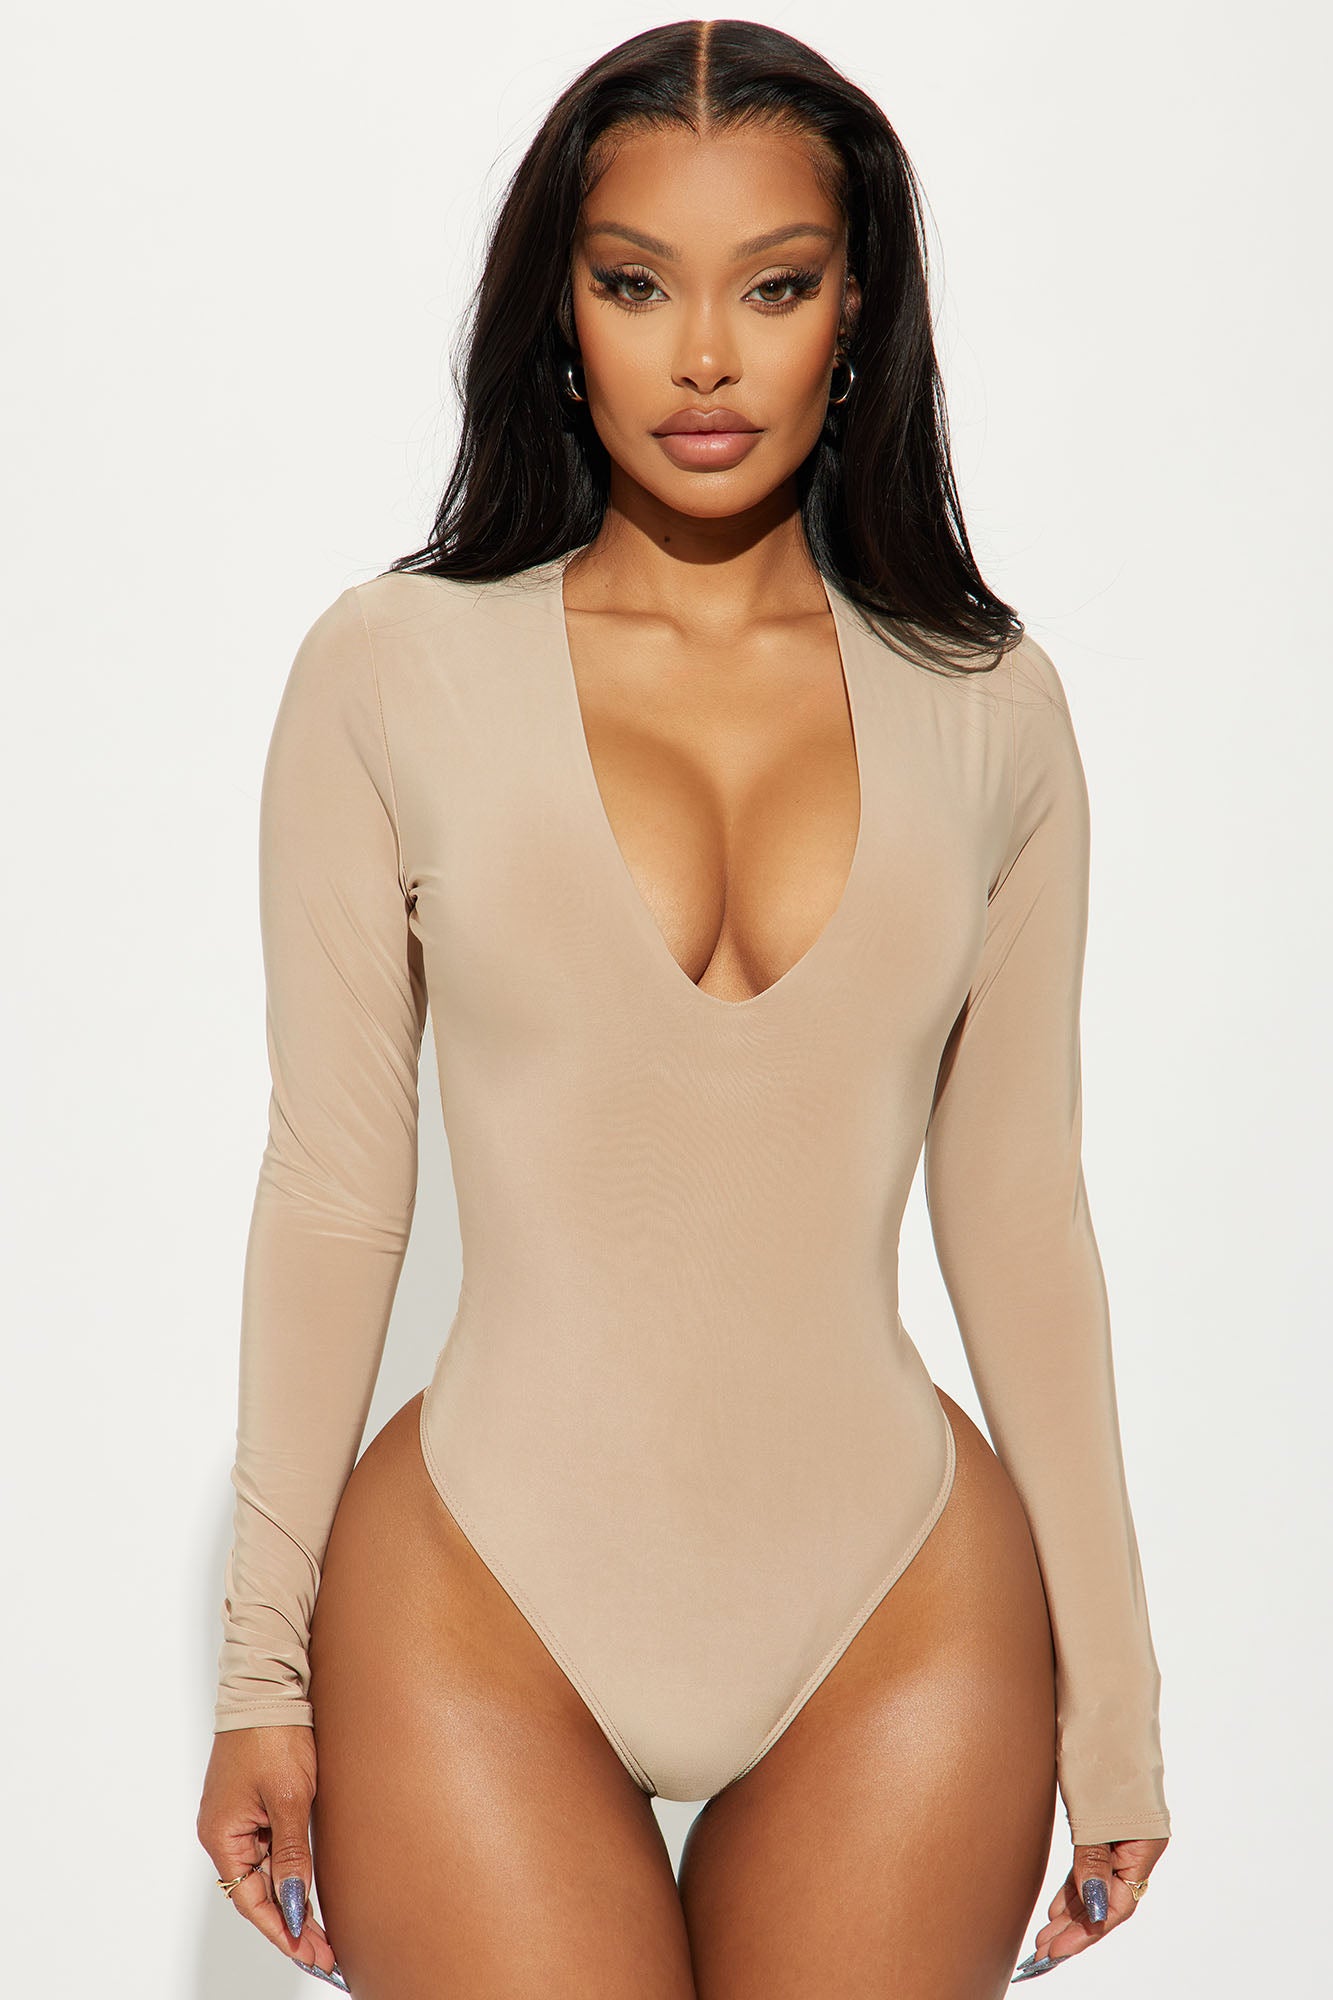  Bodysuit For Women Short Sleeve Nude Body Suits Nude Tops  Women Fashion Clothing Semolina X-Large